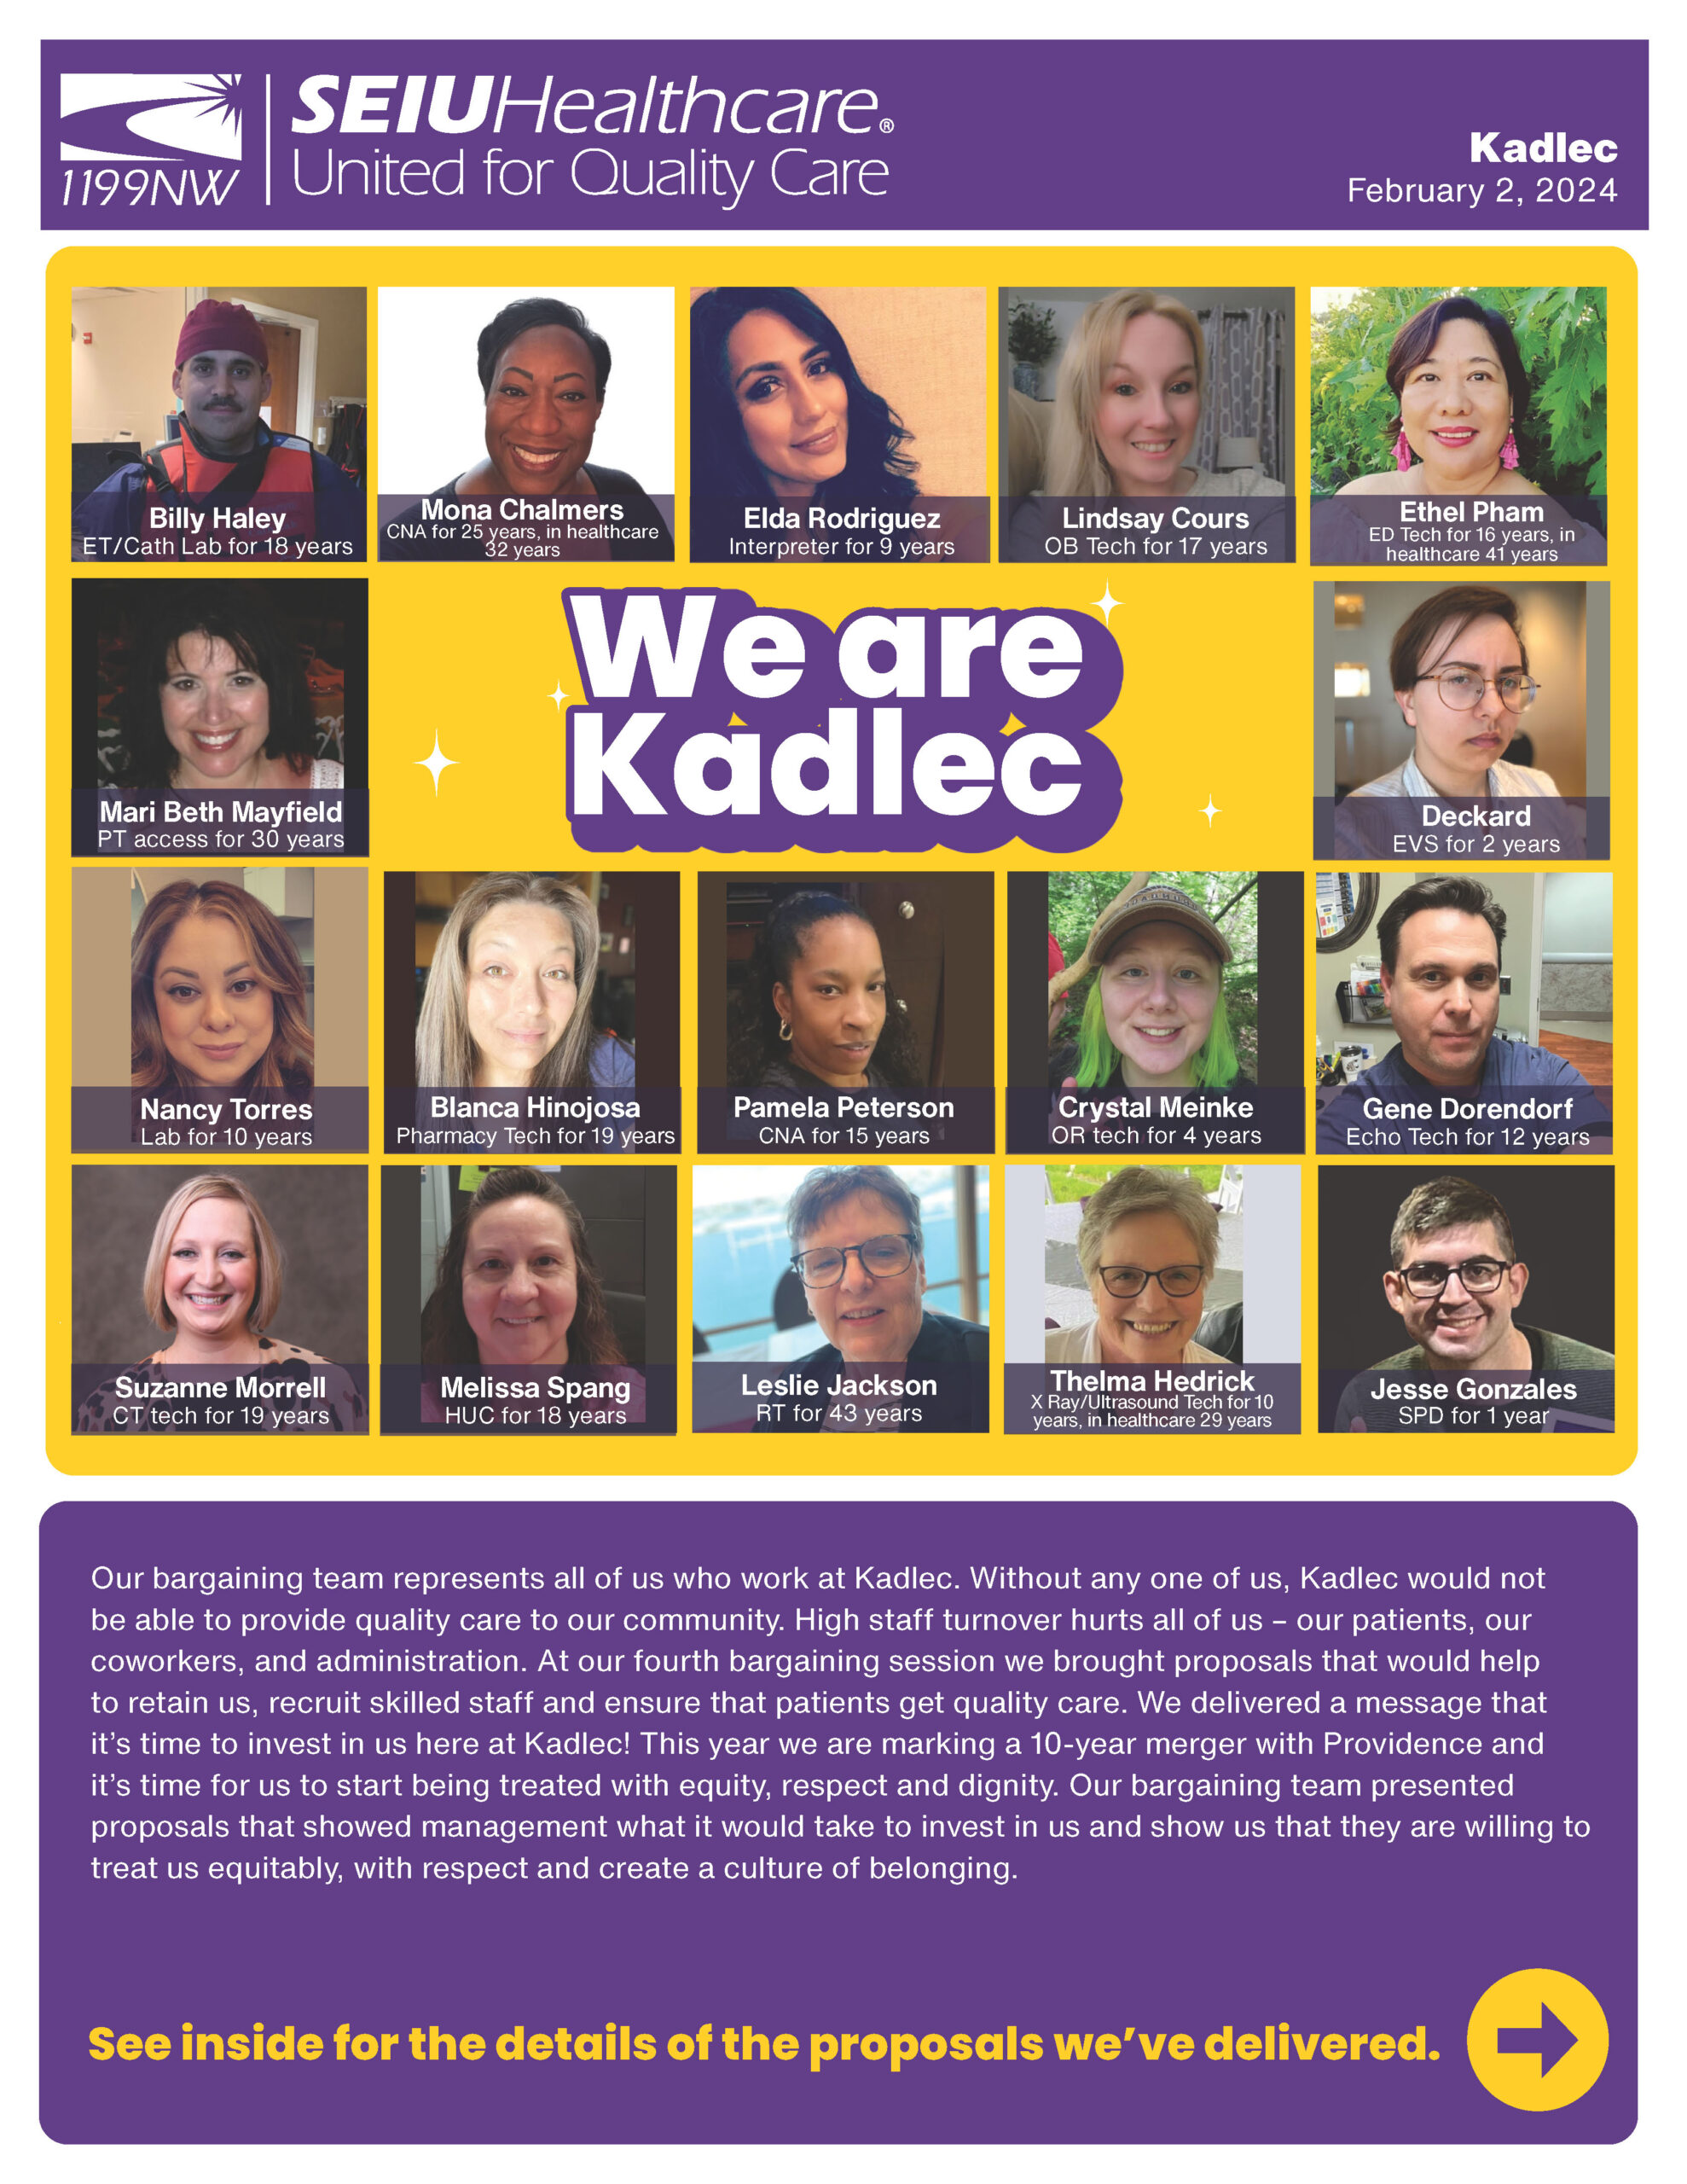 We are Kadlec